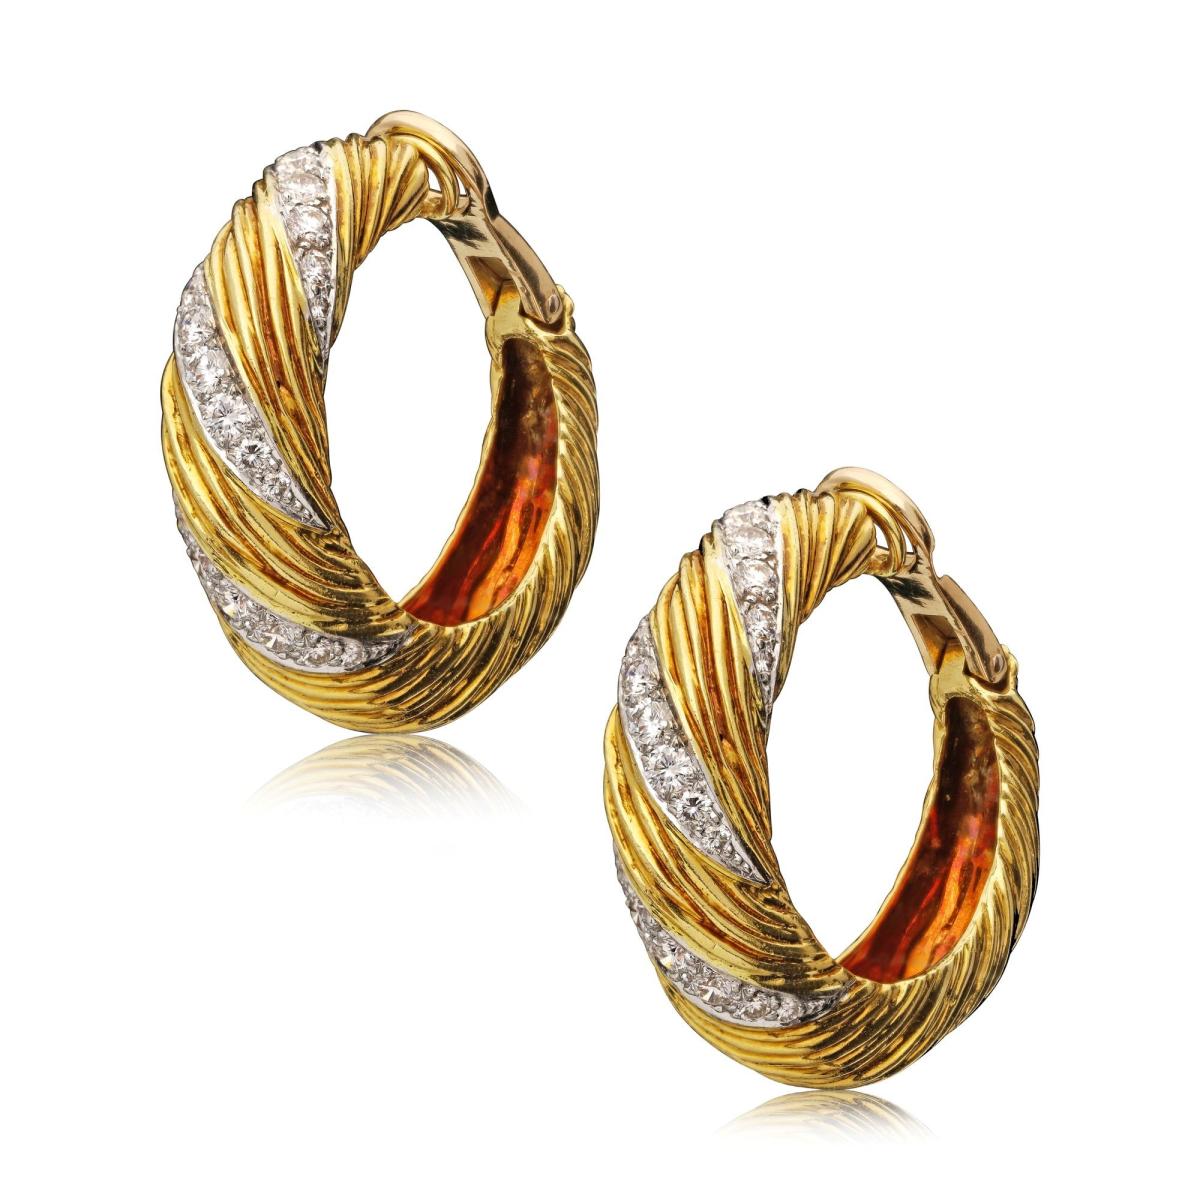 18ct gold and diamond hoop earrings